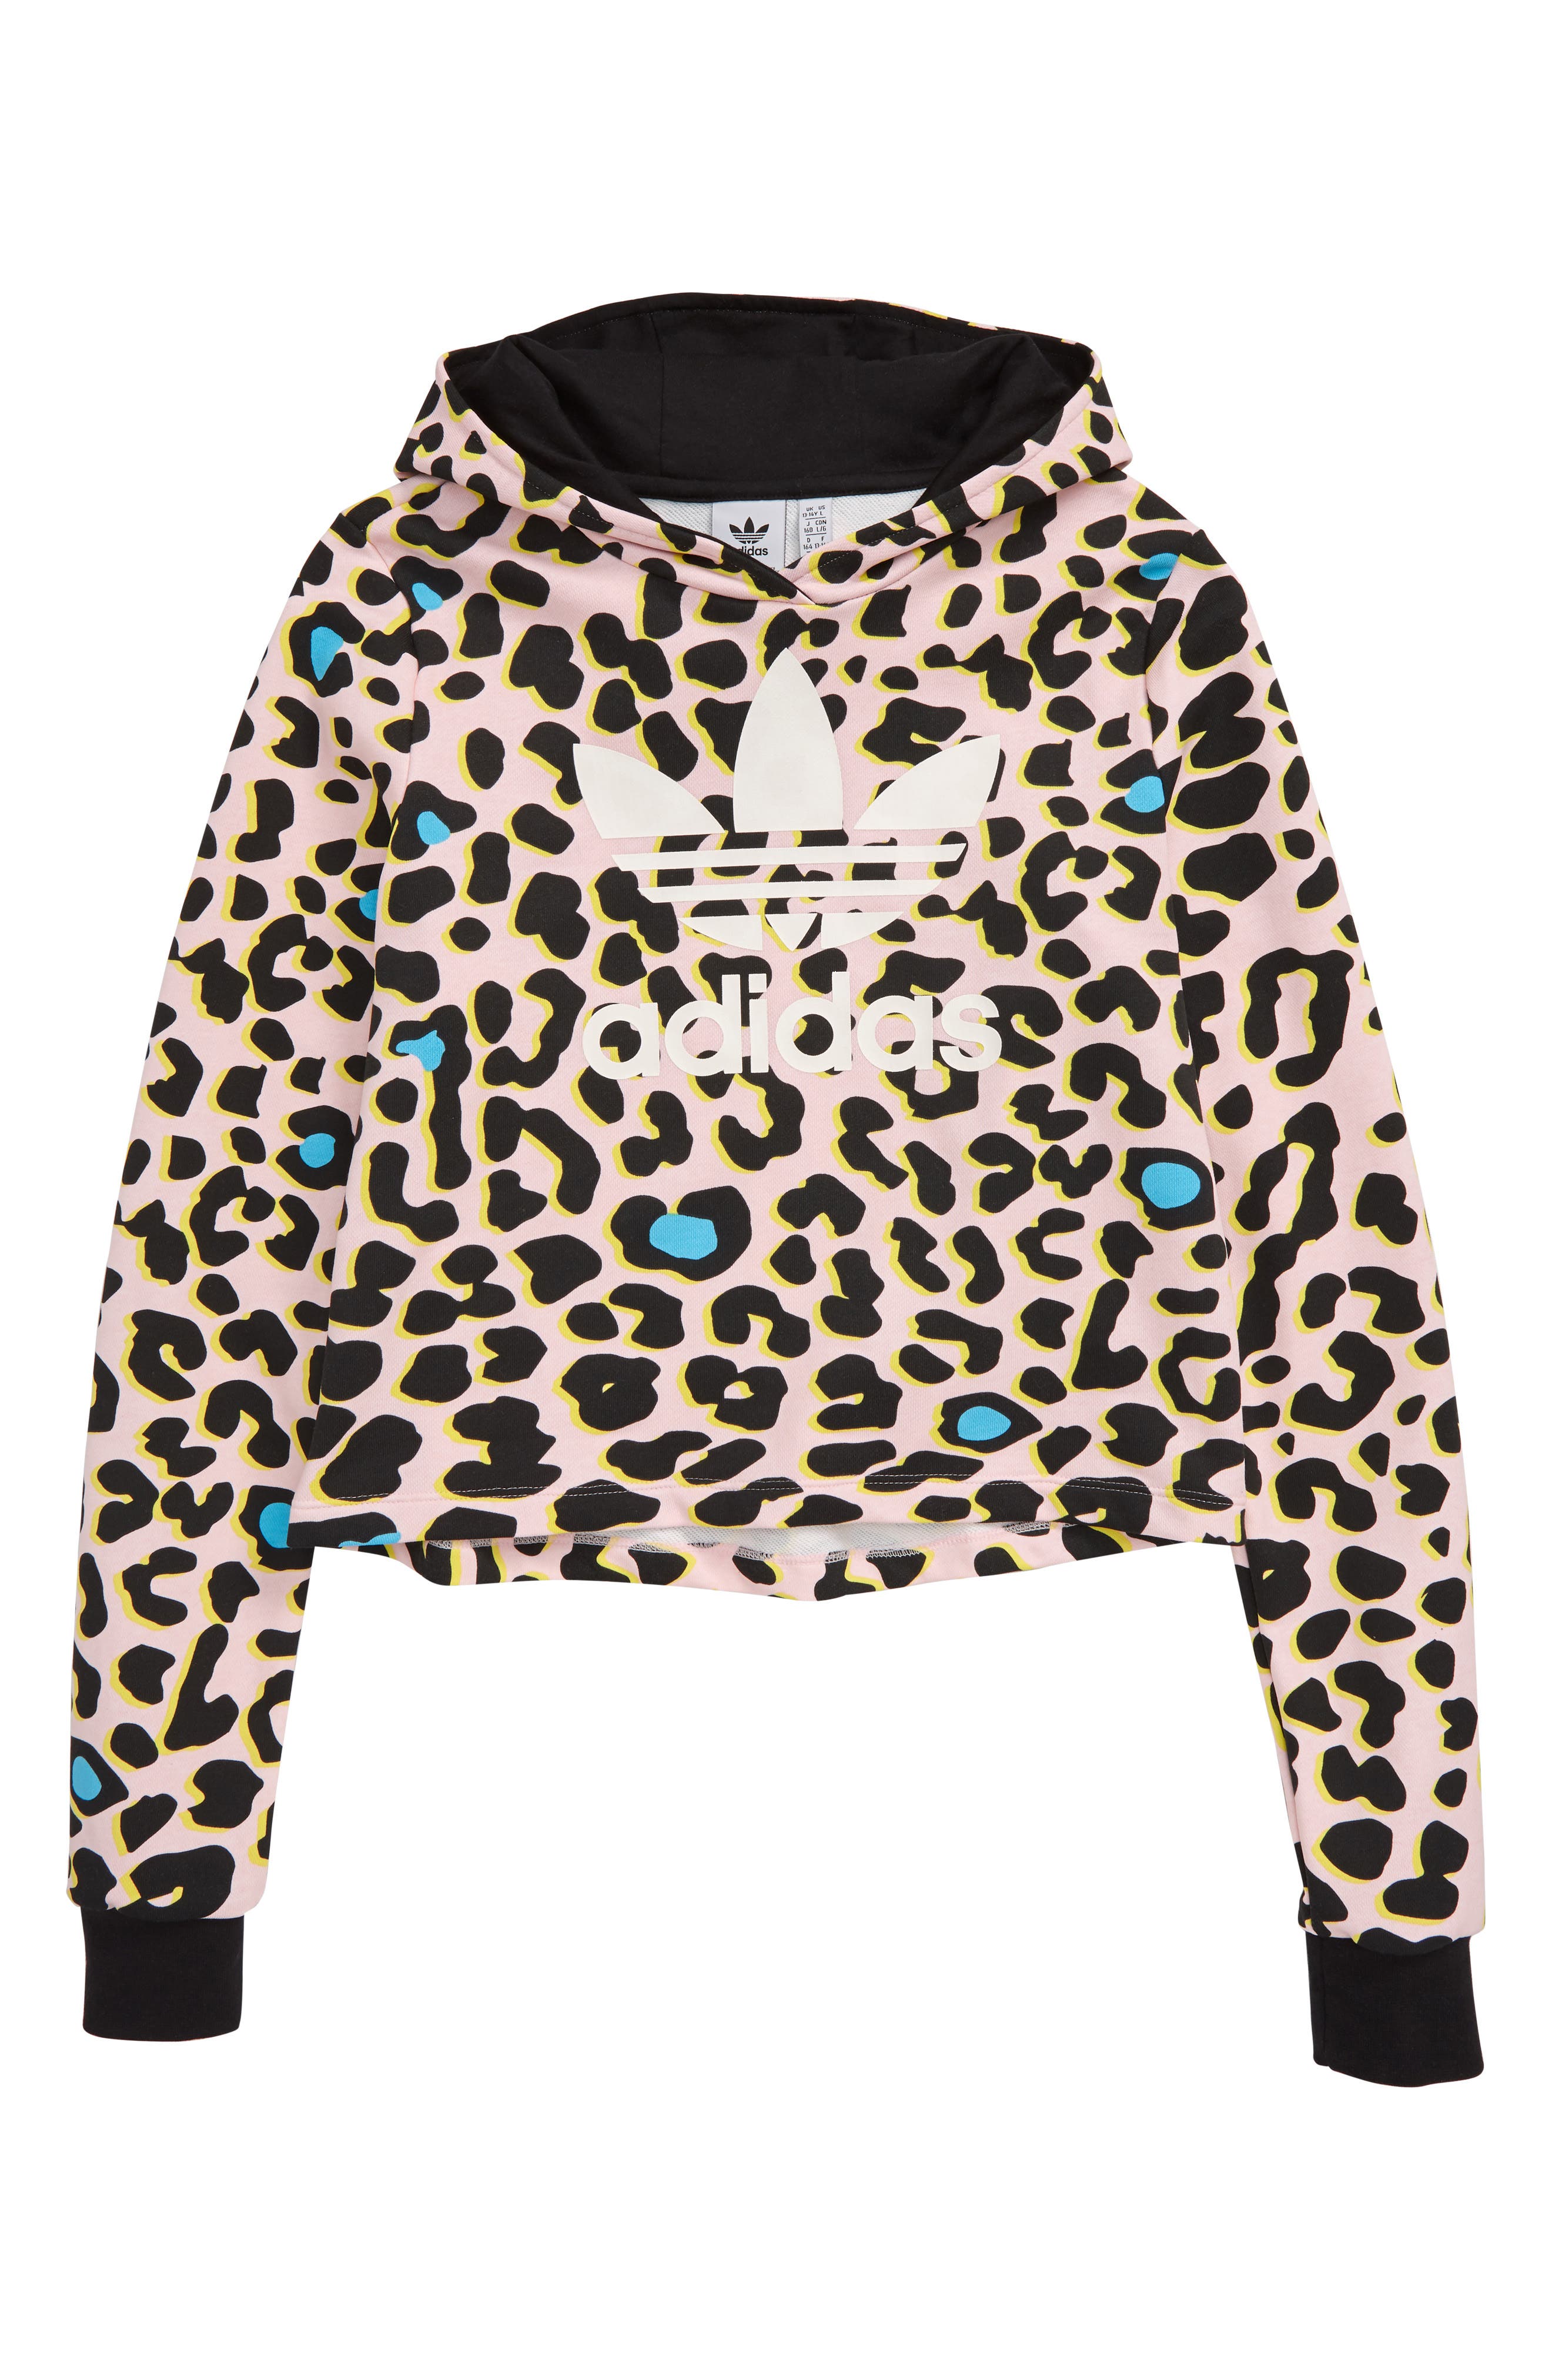 adidas leopard print sweatshirt